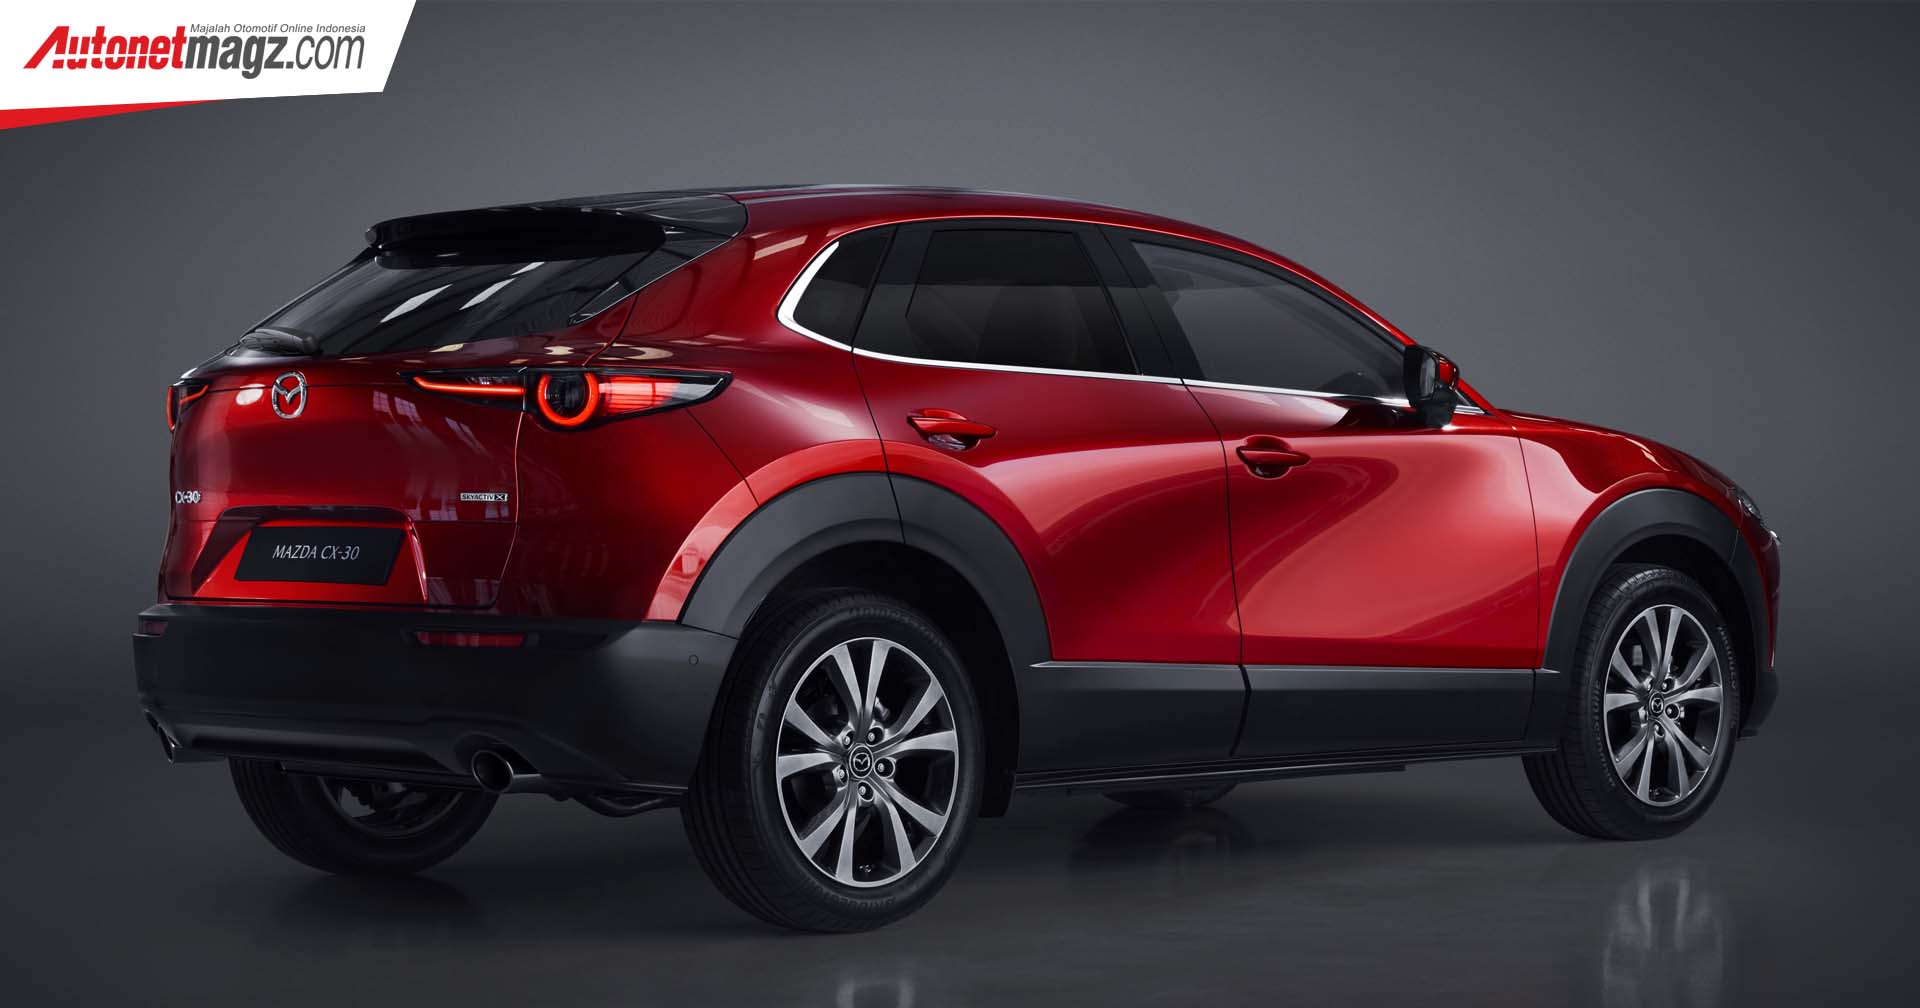 Berita, Mazda CX-30 belakang: Geneva Motor Show 2019 : SUV Baru Mazda Bukan All New CX-3, Tapi CX-30